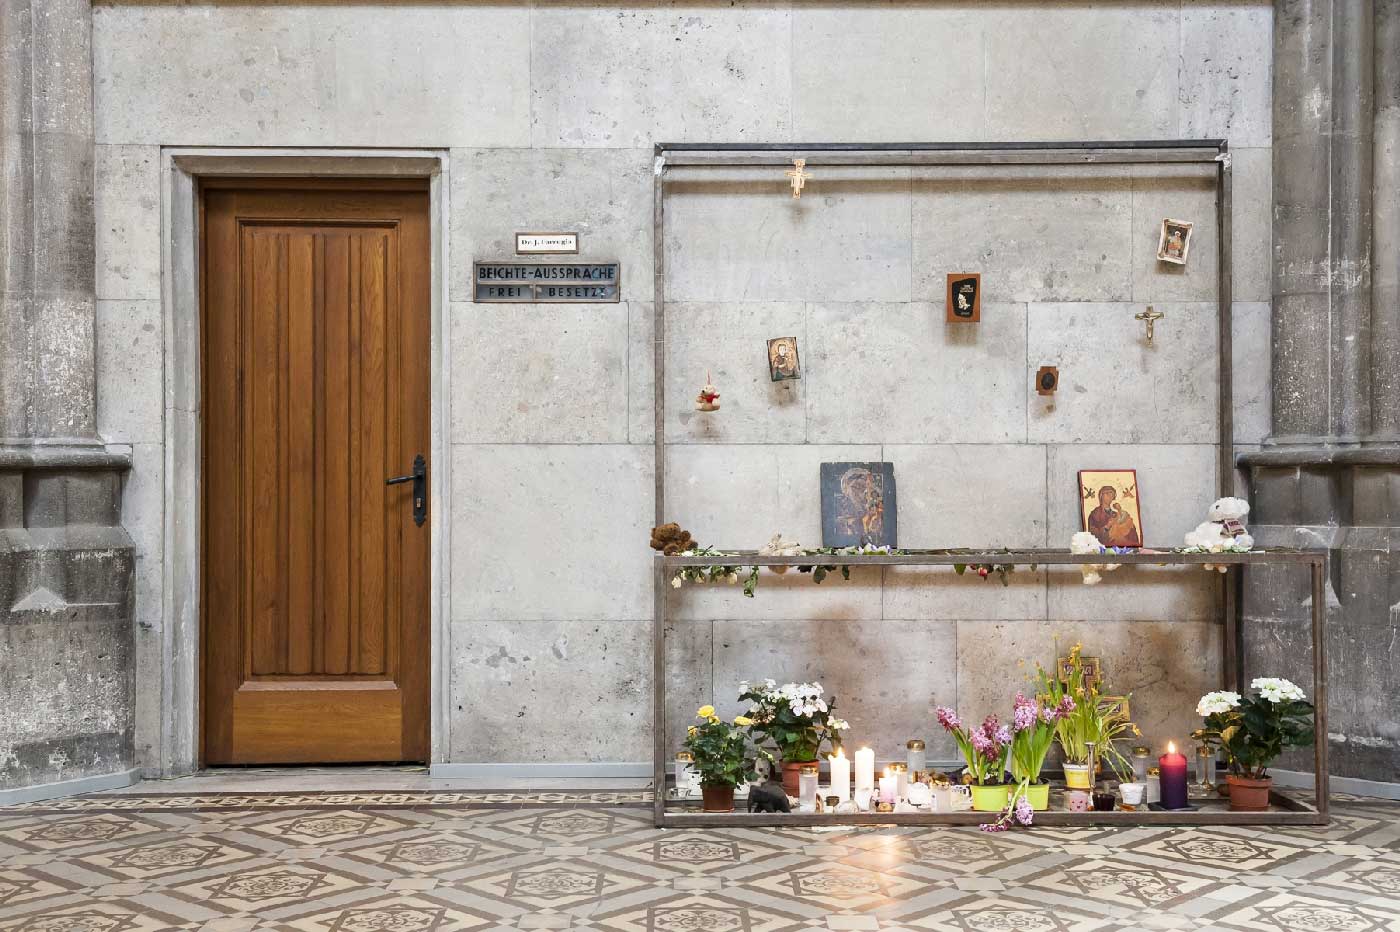 David Rastas, Shrine for victims, 2014